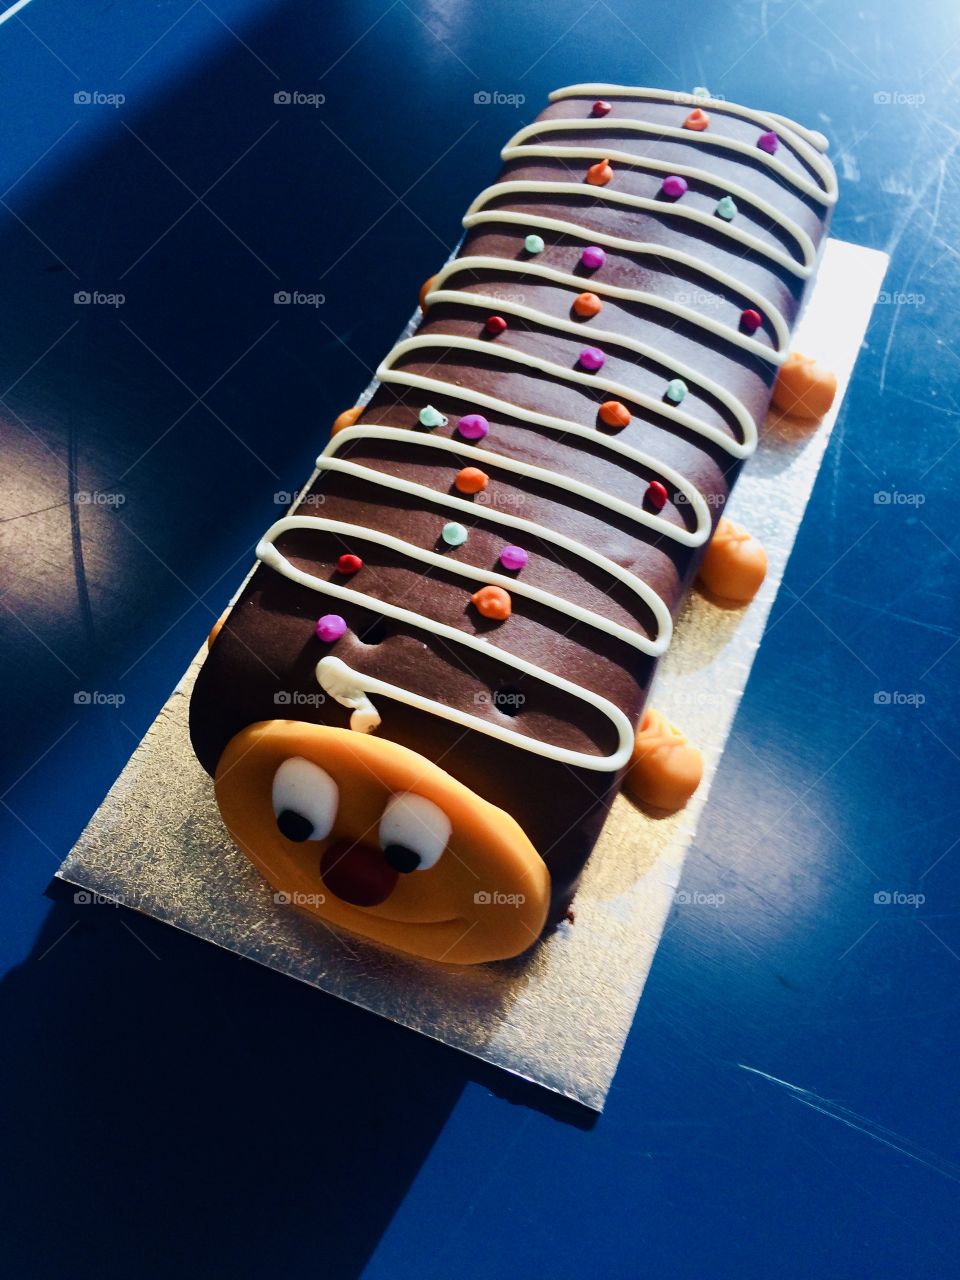 Fun and Cute Caterpillar Cake 